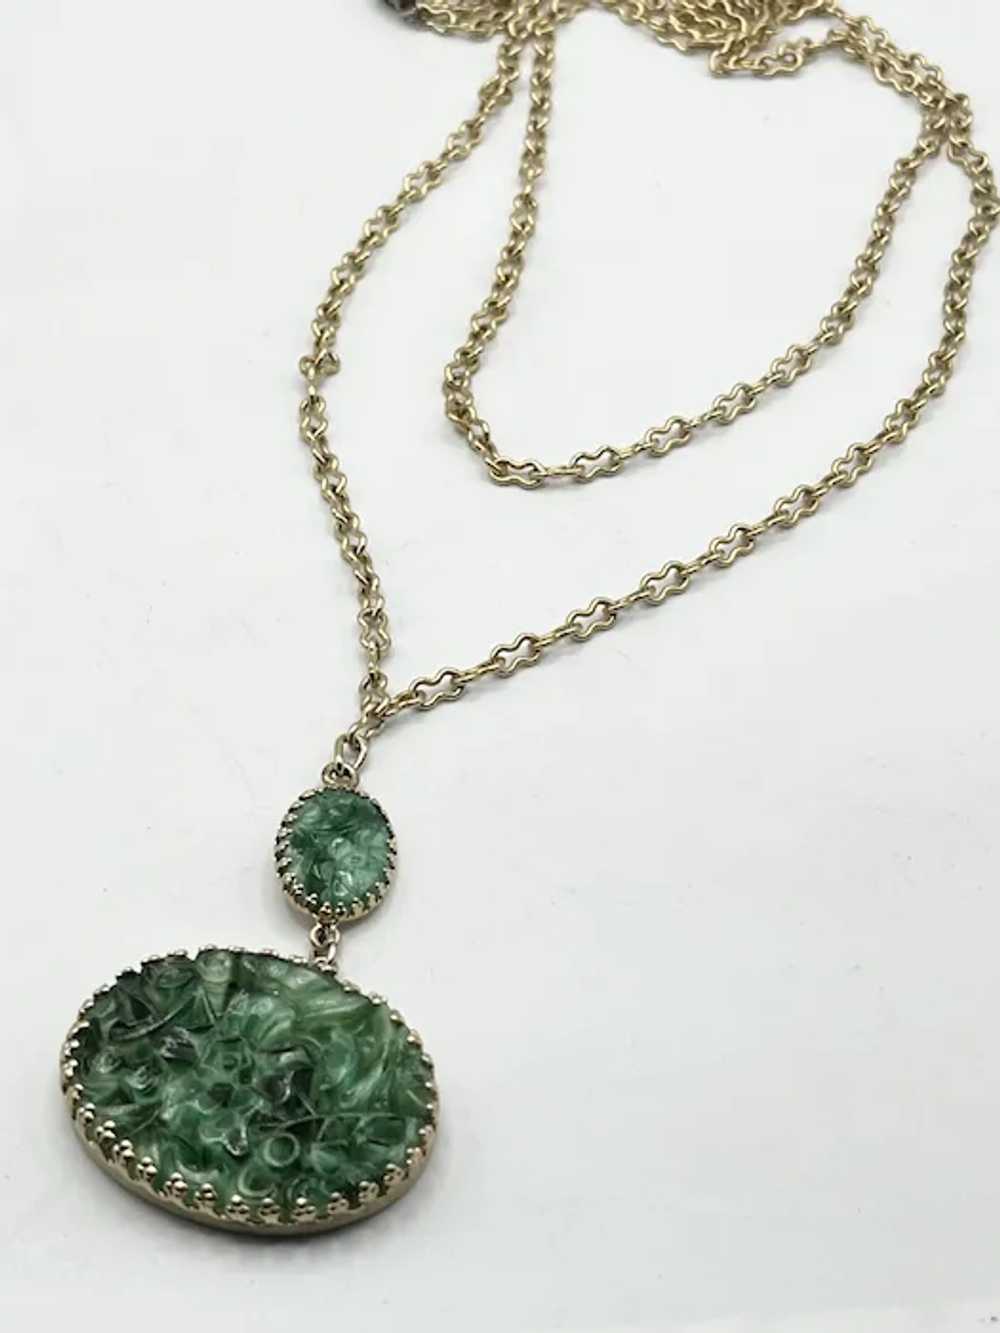 Vintage Green Napier Double Strand Necklace - image 2